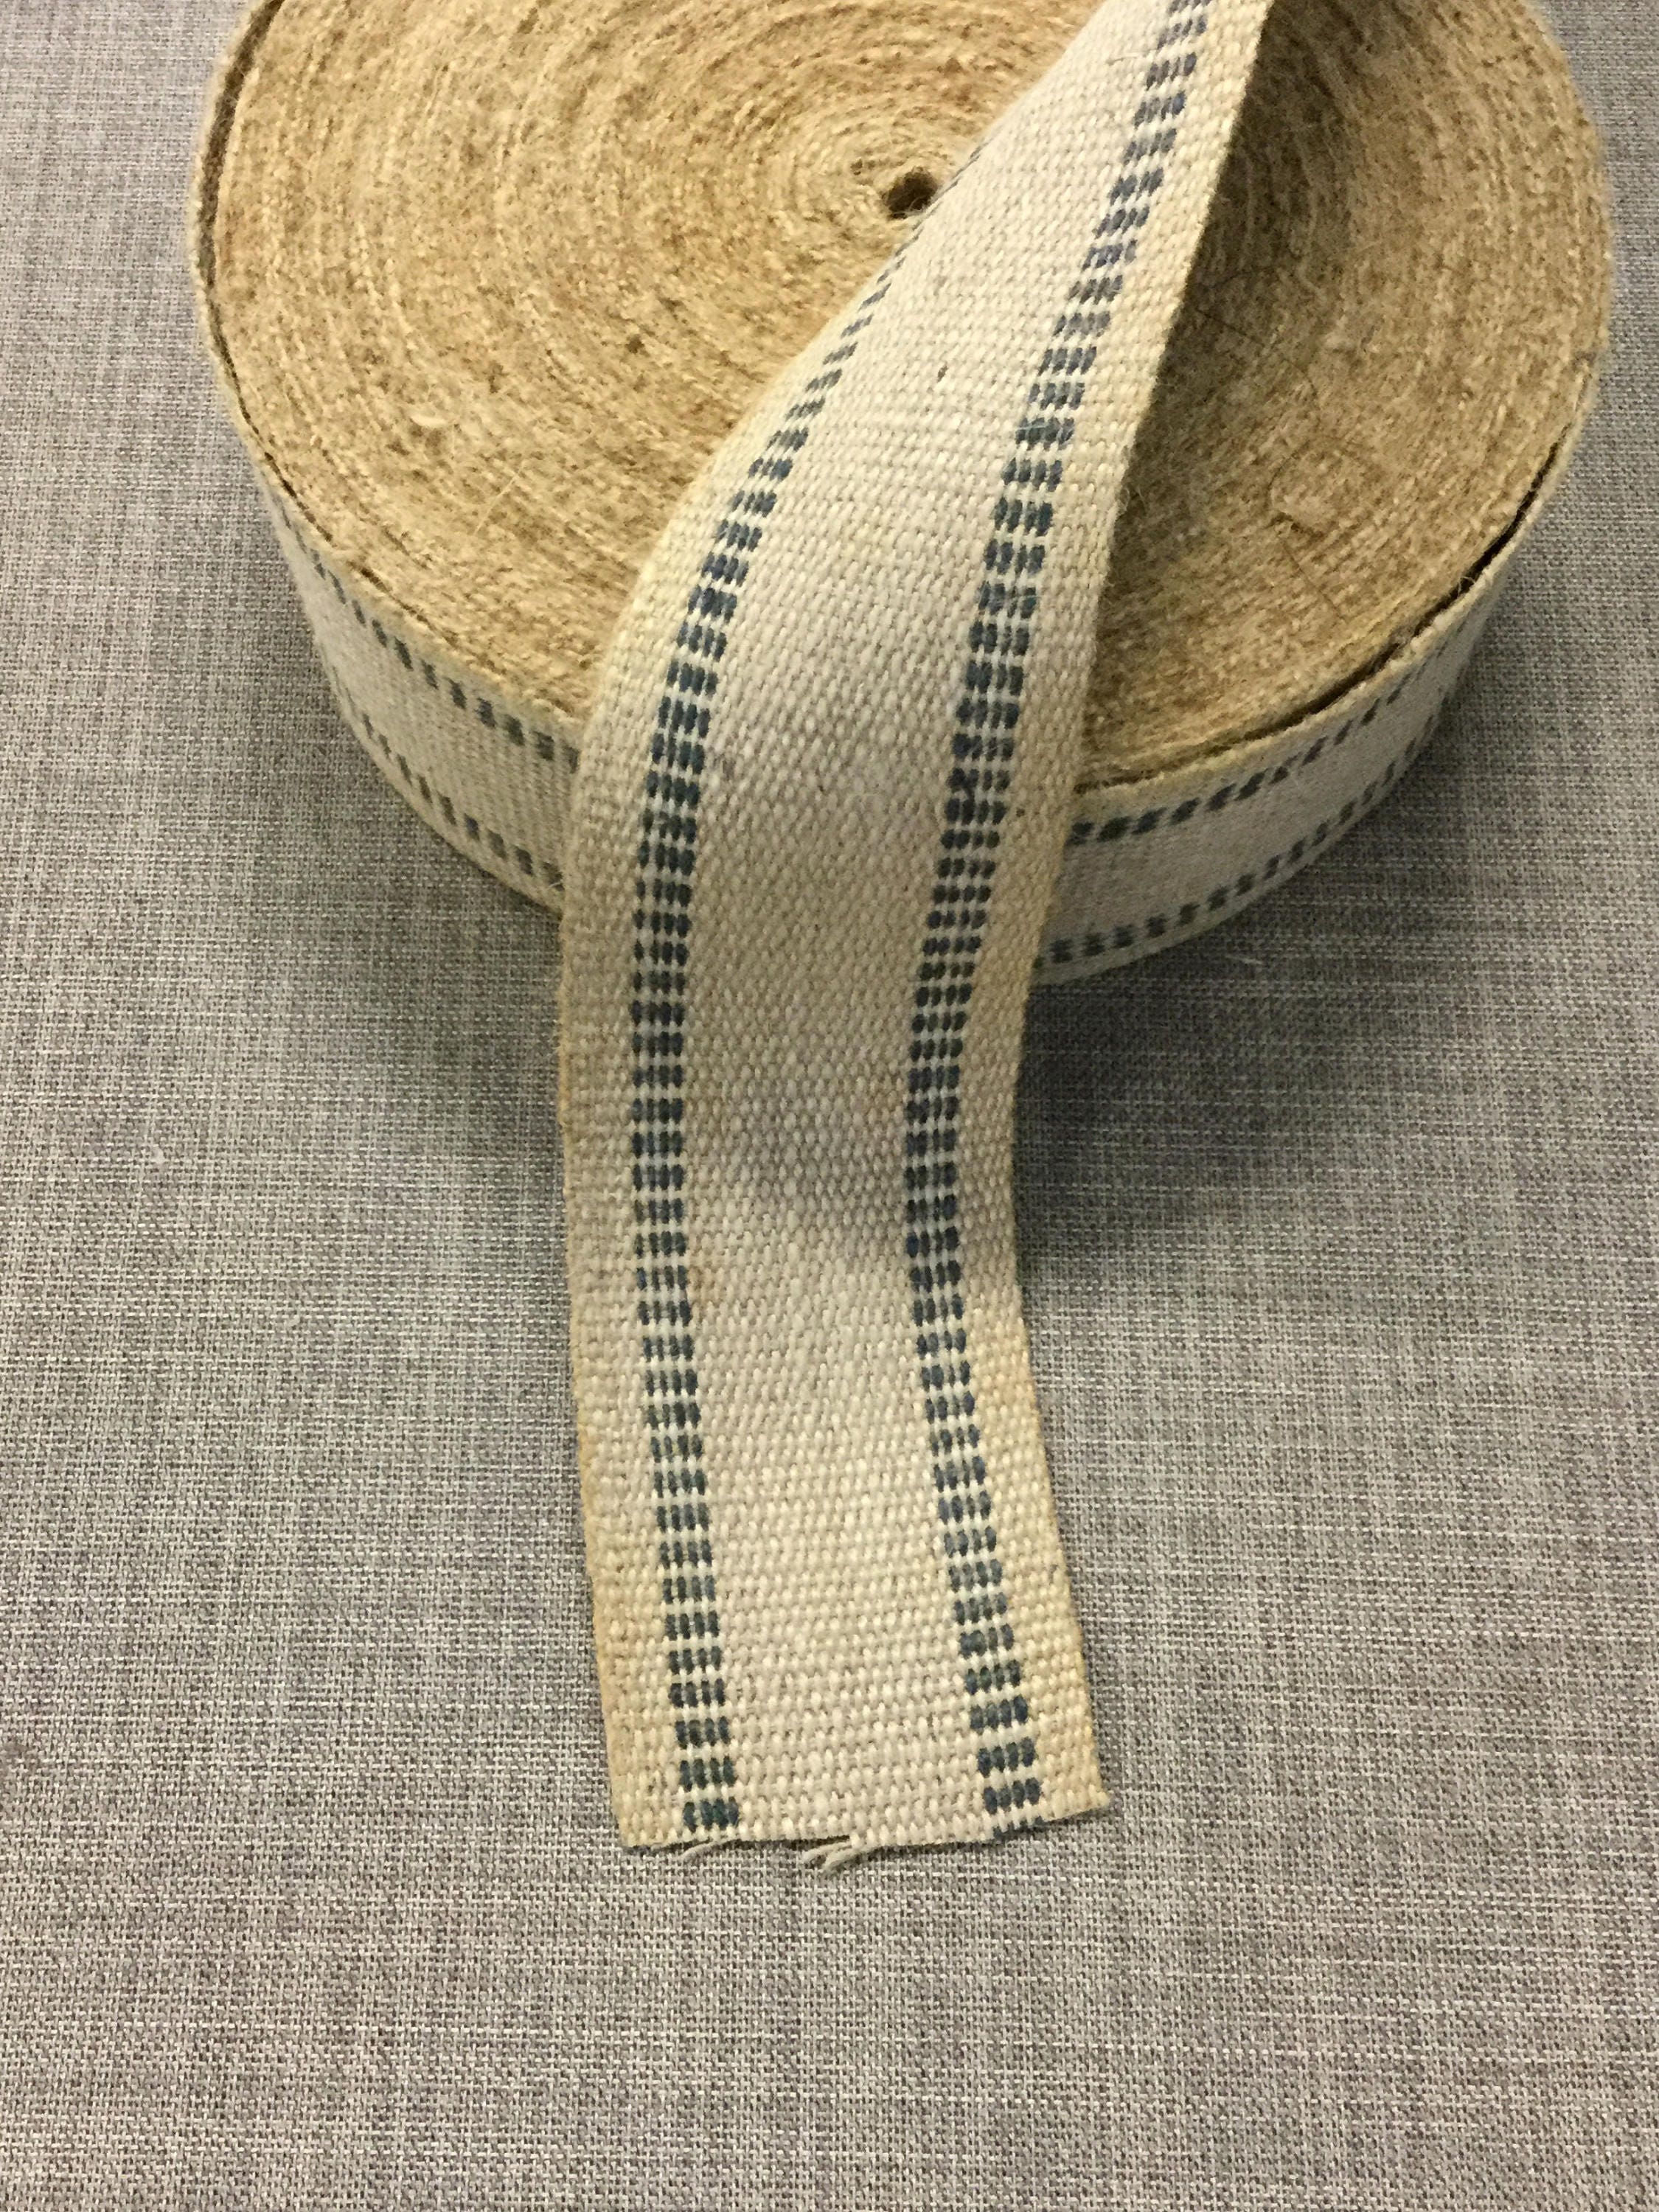 Cotton Upholstery Batting Wadding-professional Grade-raw Cotton 